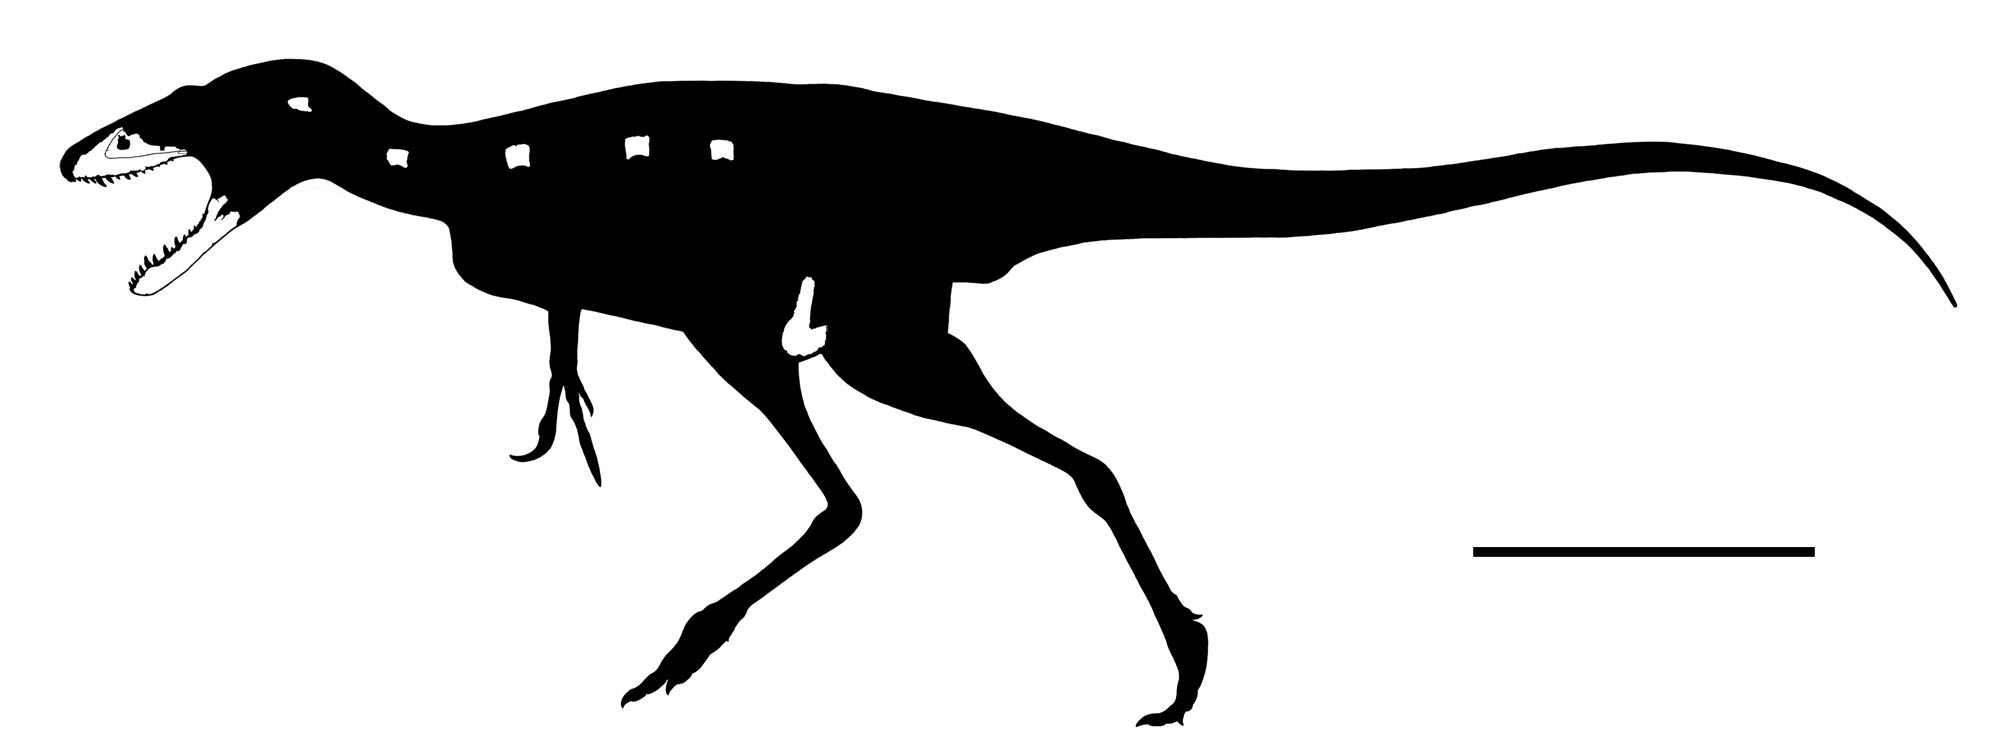 تويتر らえらぷす 新 恐竜骨格図集 発売中 على تويتر Skeletal Reconstruction Of Jinbeisaurus Wangi Holotype Smg V0003 Scale Bar Is 1m T Co Gjapdehu